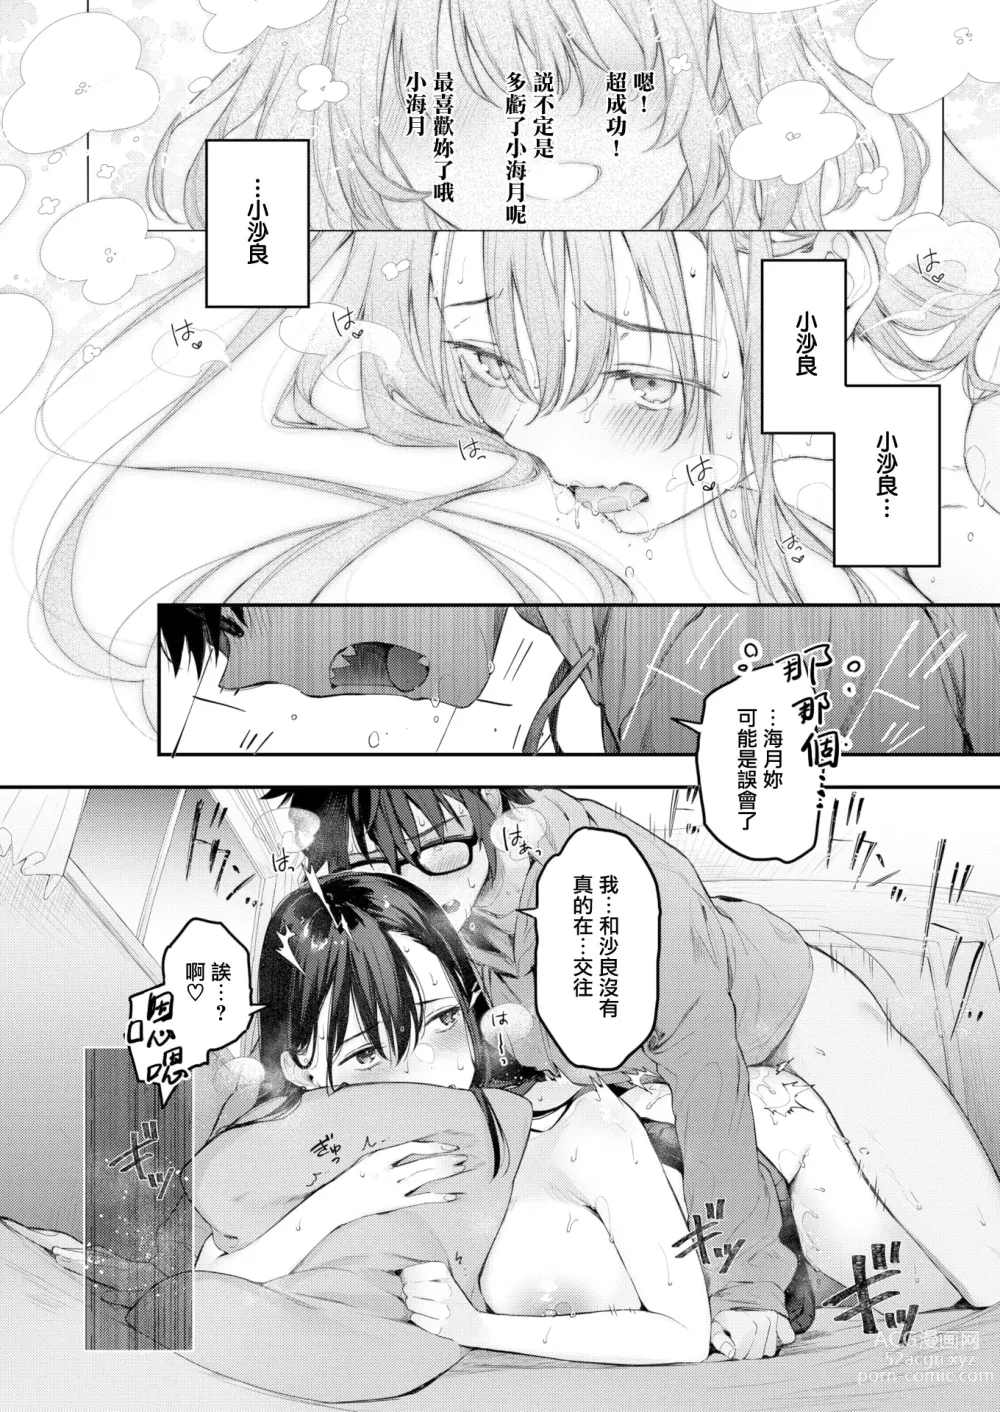 Page 22 of manga Watashi no Kirai na Hito (uncensored)